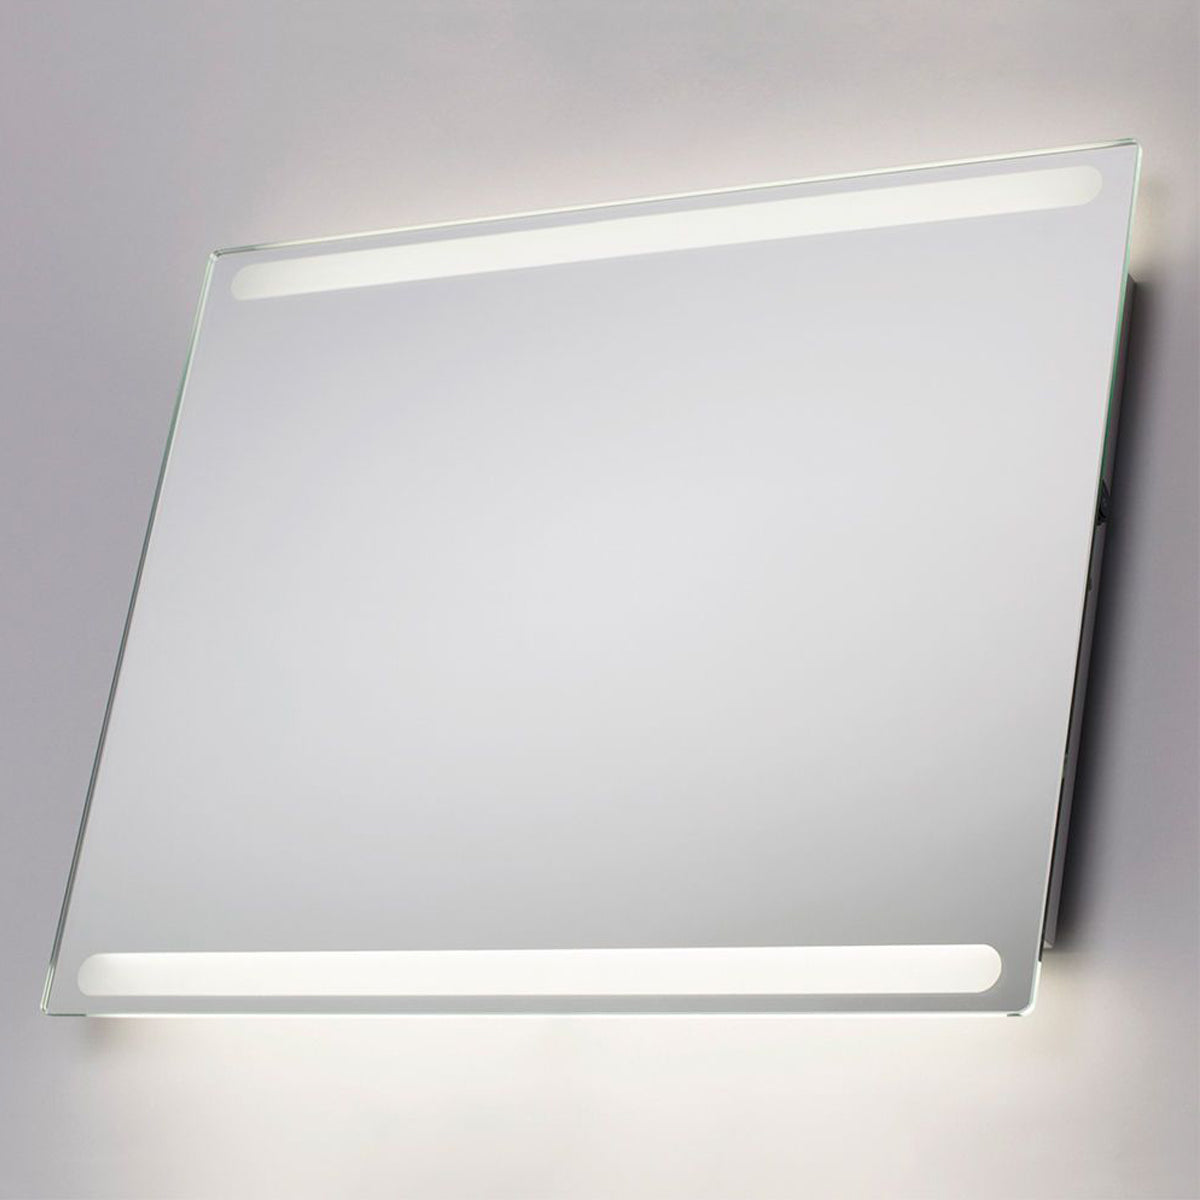 CGC DREW Bathroom Mirror LED Light With On/Off Switch